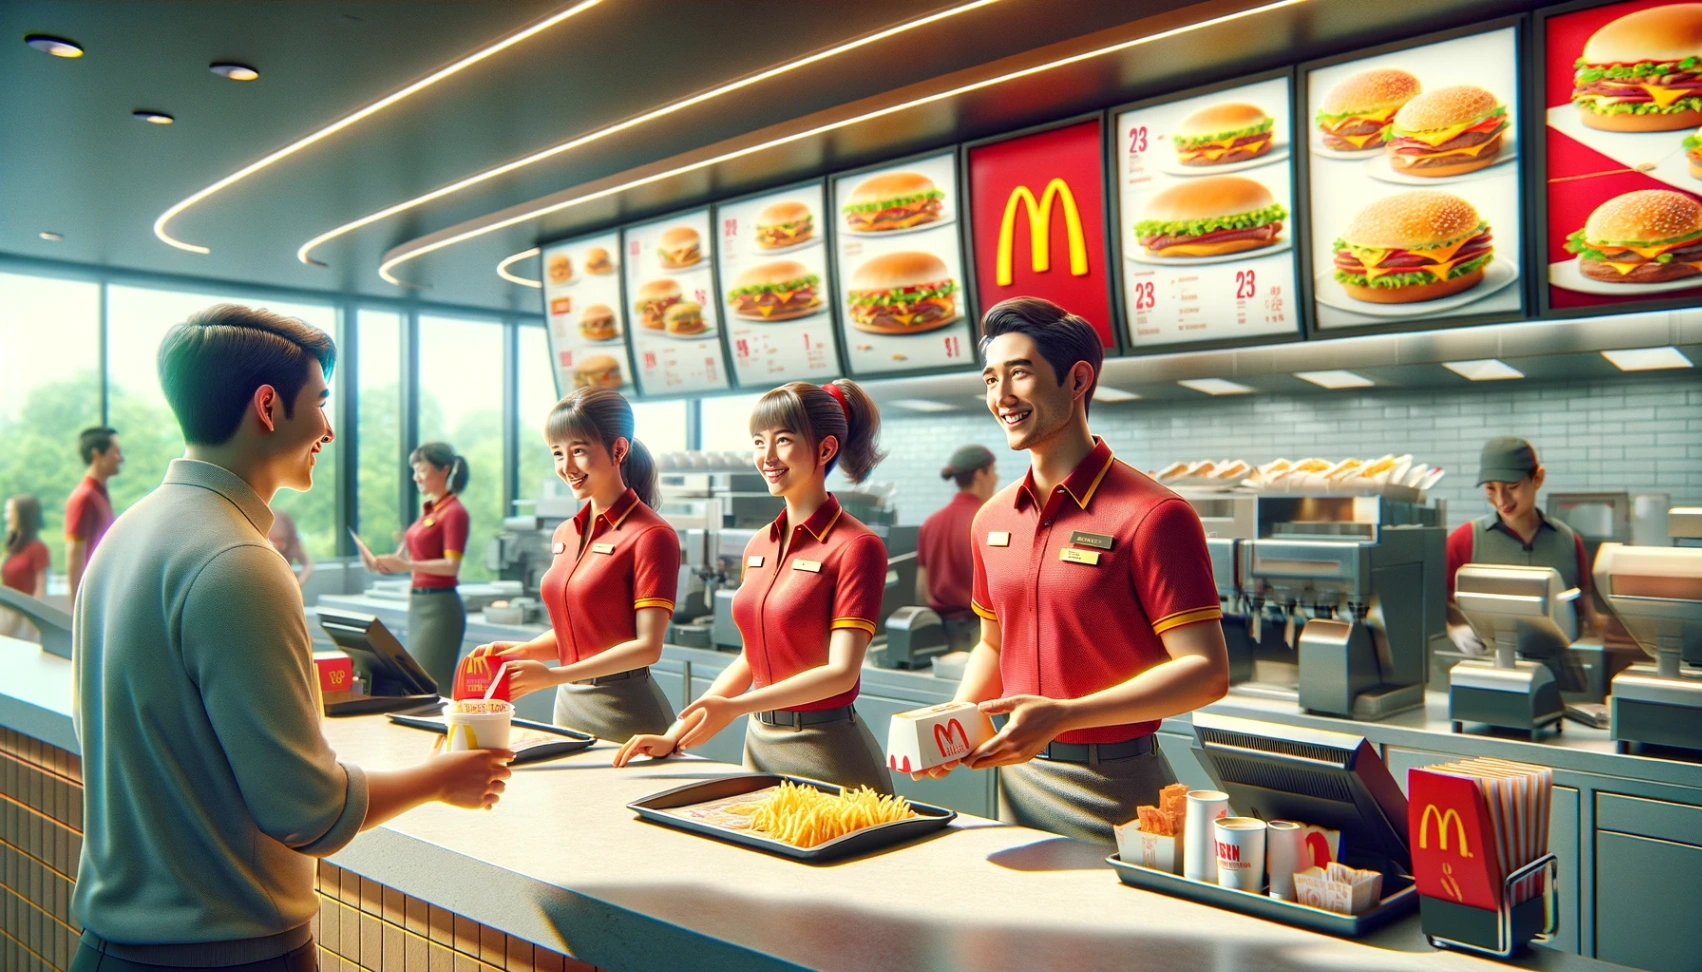 Jawatan kosong di McDonald's: Ketahui Cara Memohon Dengan Mudah Secara Online [WW]